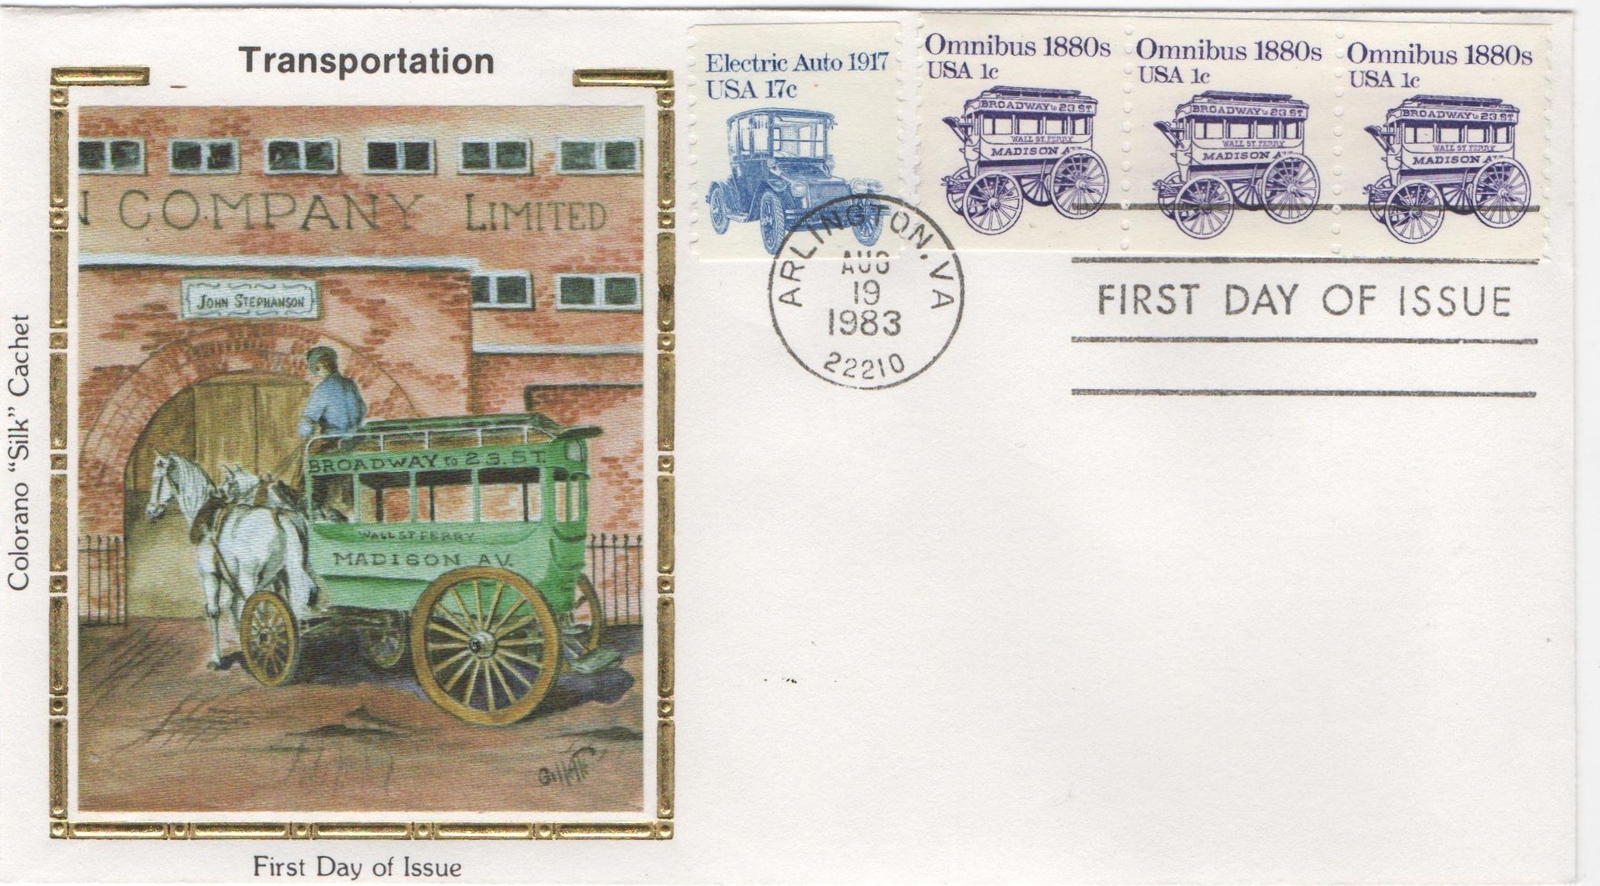 08/19/1983 FDI, 3 1880s Omnibus and 1 1917 Electric Auto Stamps Arlington, VA - $2.00